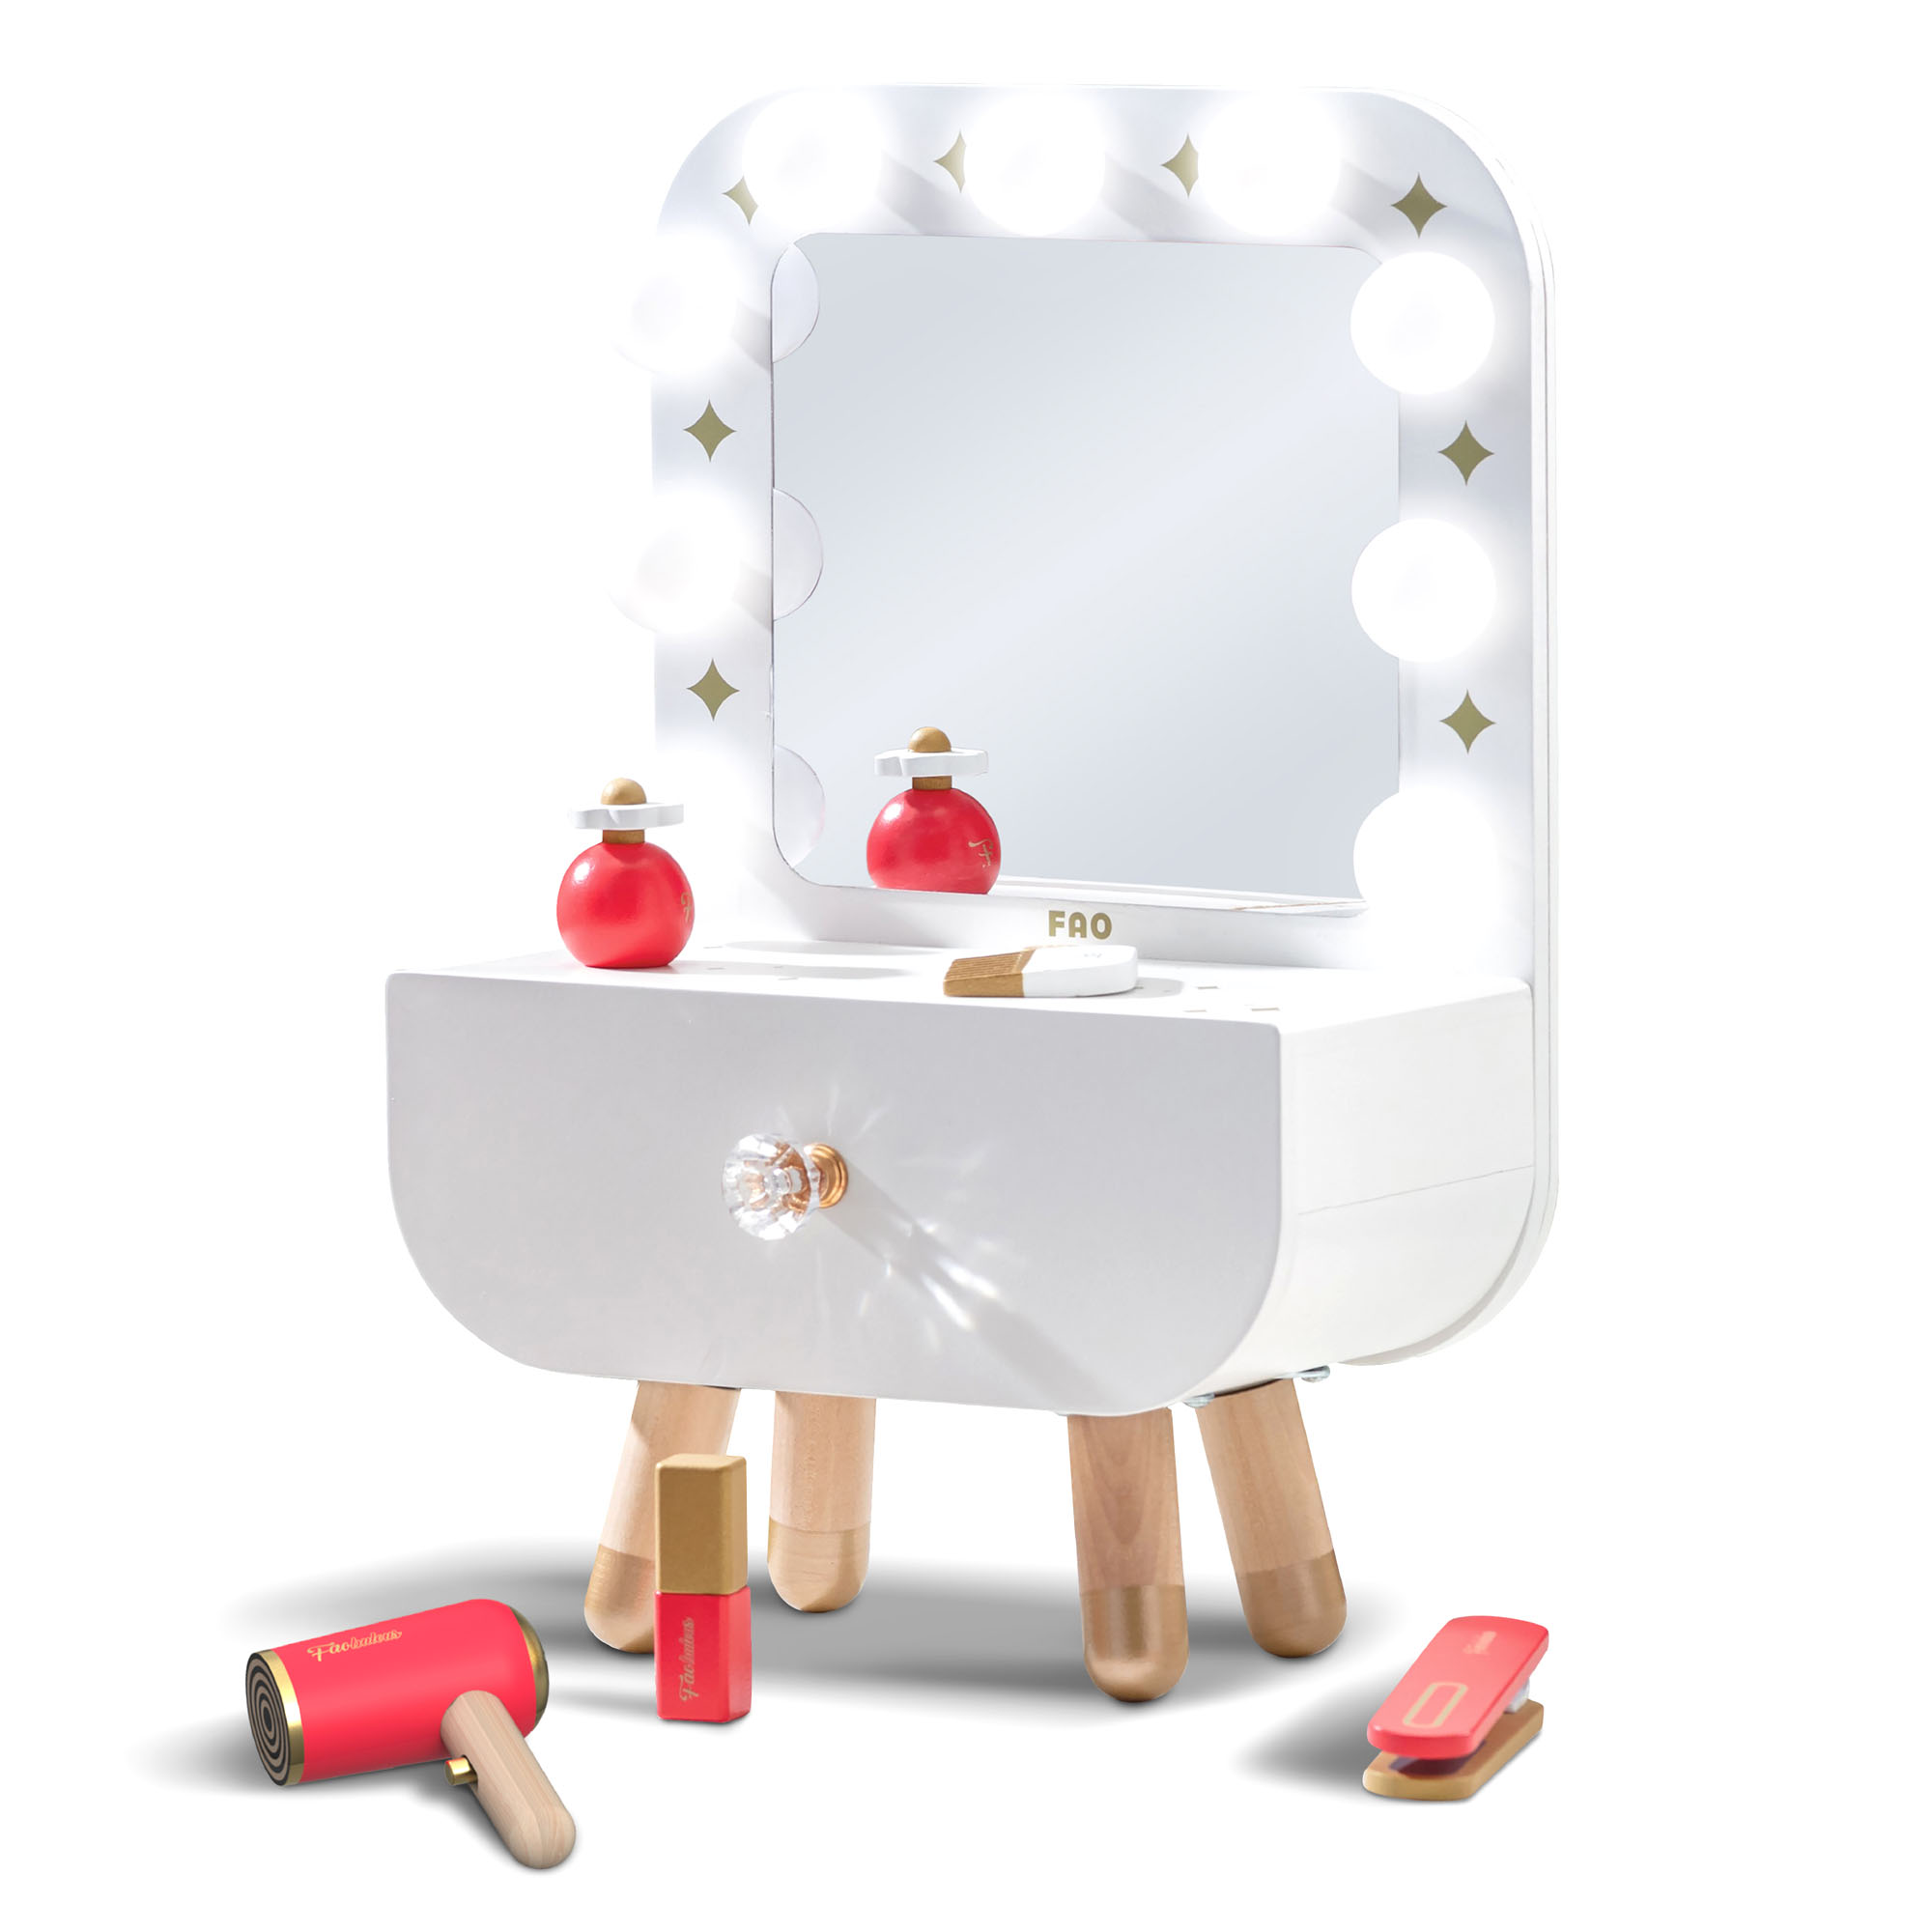 Set trucco vanity make-believe magic mirror - FAO Schwarz